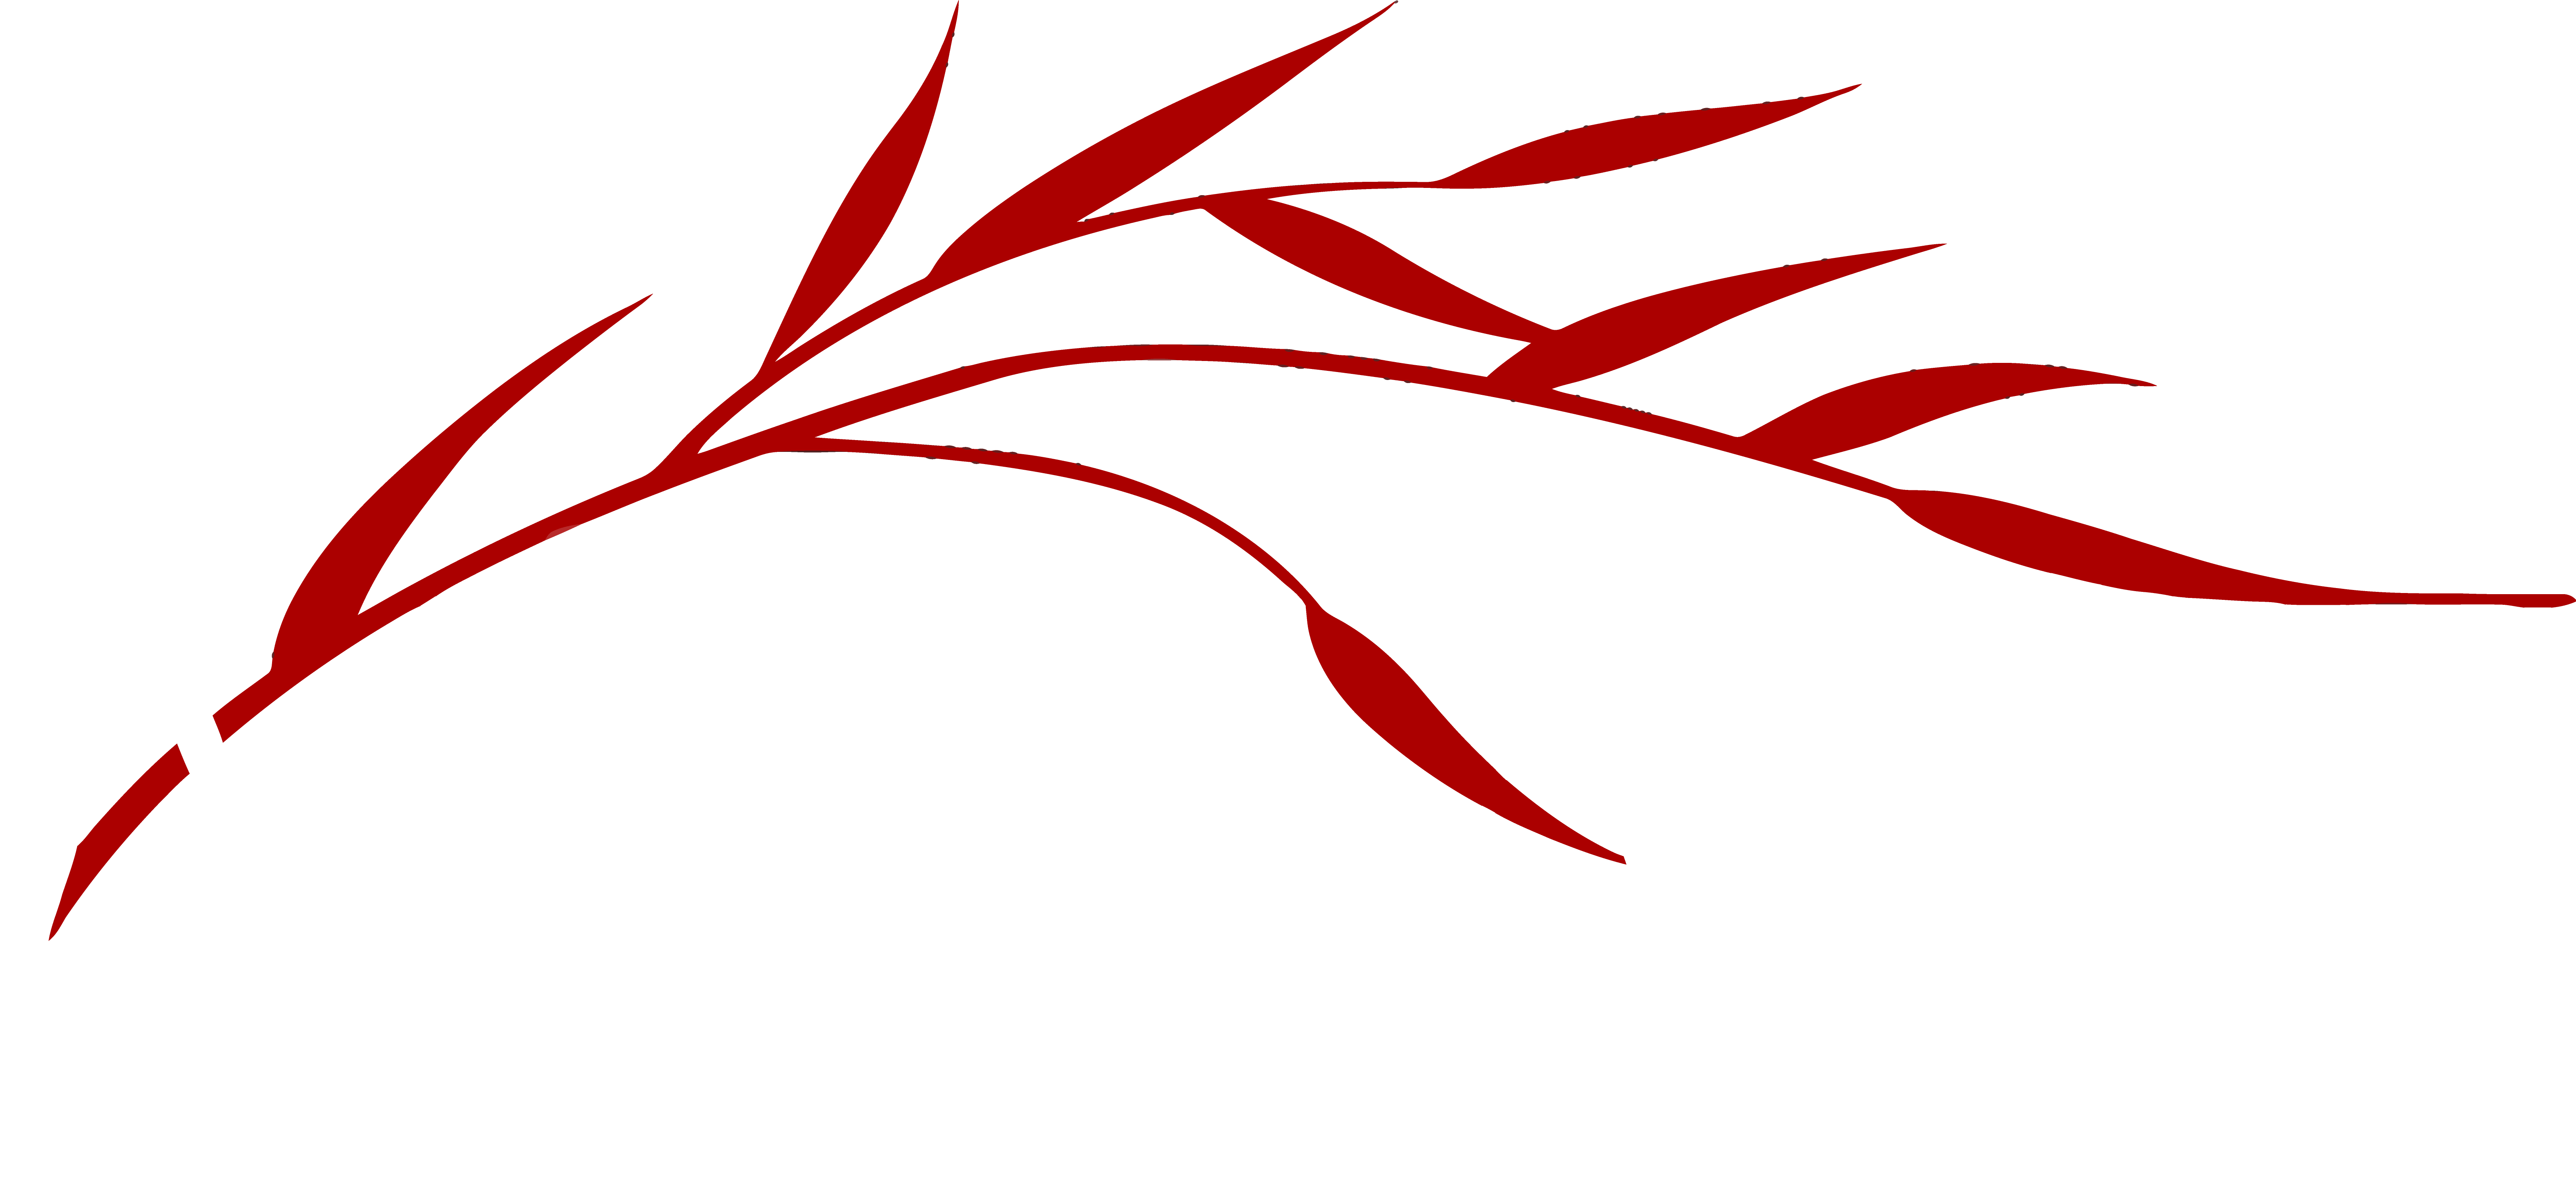 A Day Away Salon & Spa